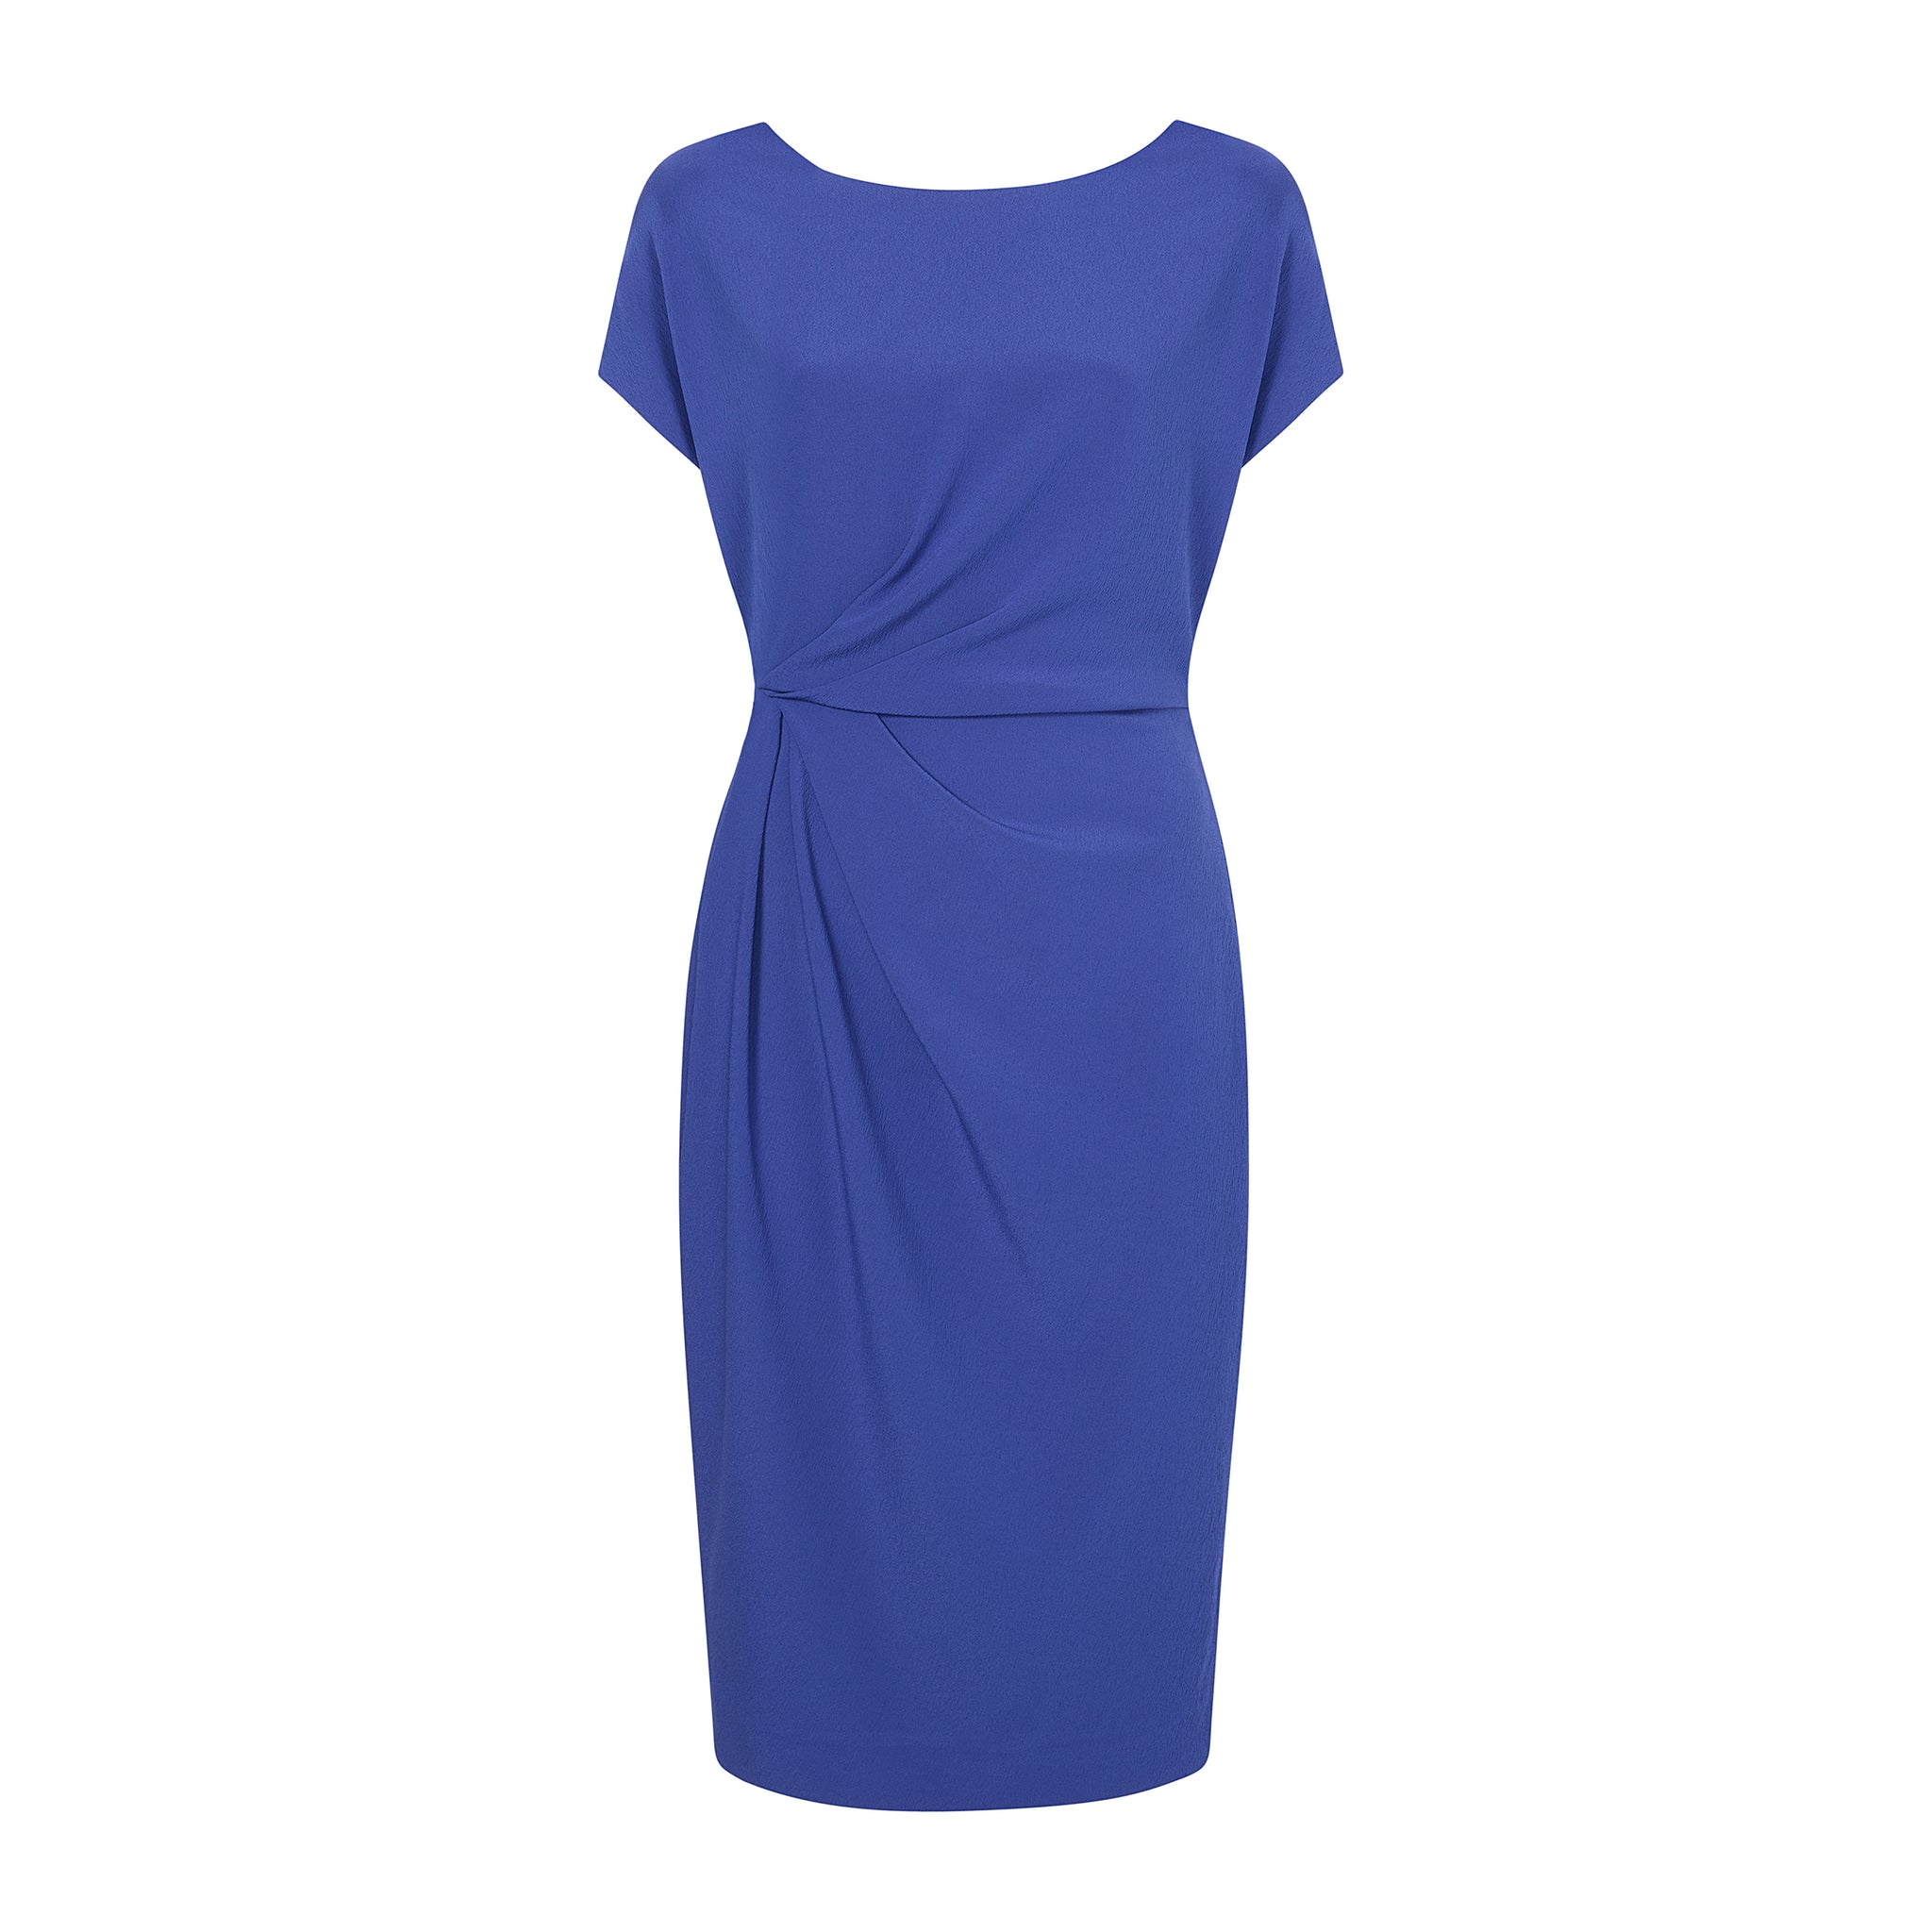 packshot image of the jillian dress in royal blue